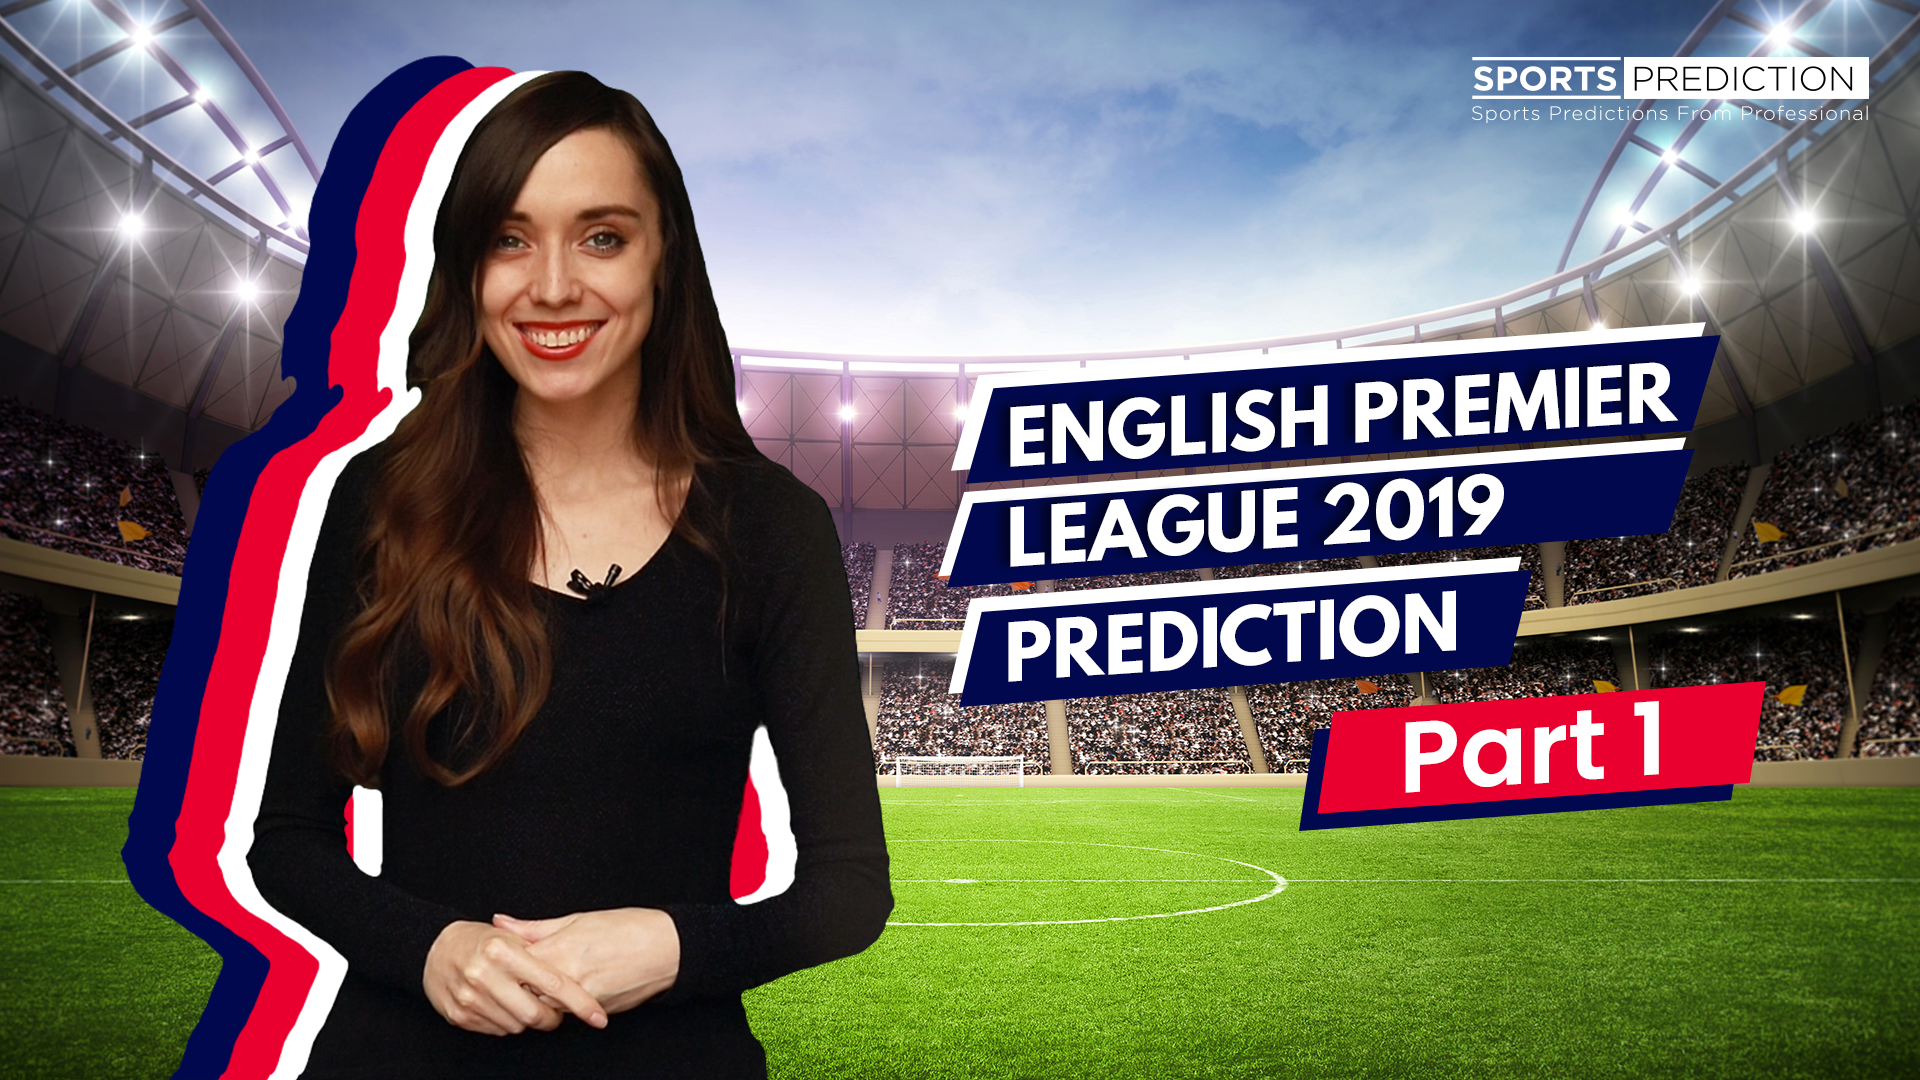 Soccer Prediction | English Premier League 2019 Prediction Part 1